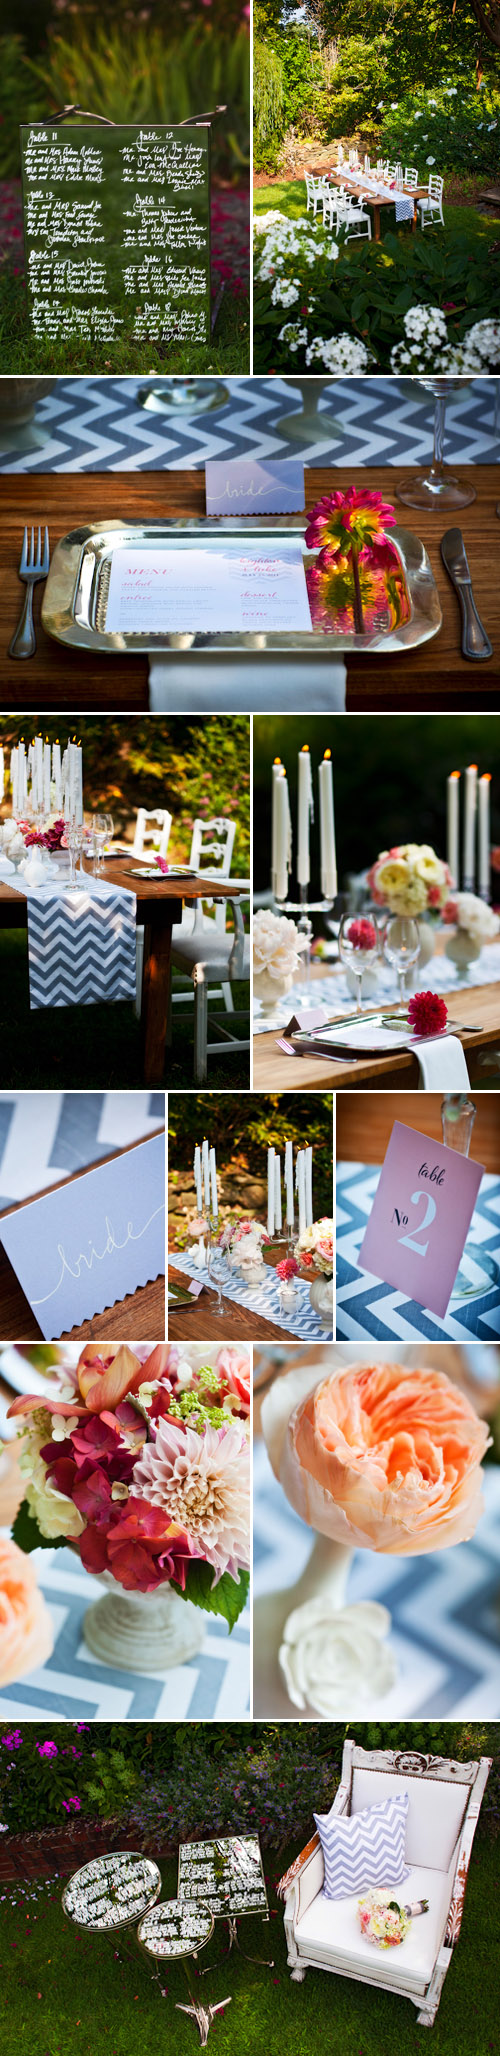 blue and white chevron print wedding decor, garden wedding ideas and inspiration shoot at Charlottesville, Virginia's Clifton Inn, photos by Holland Photo Arts